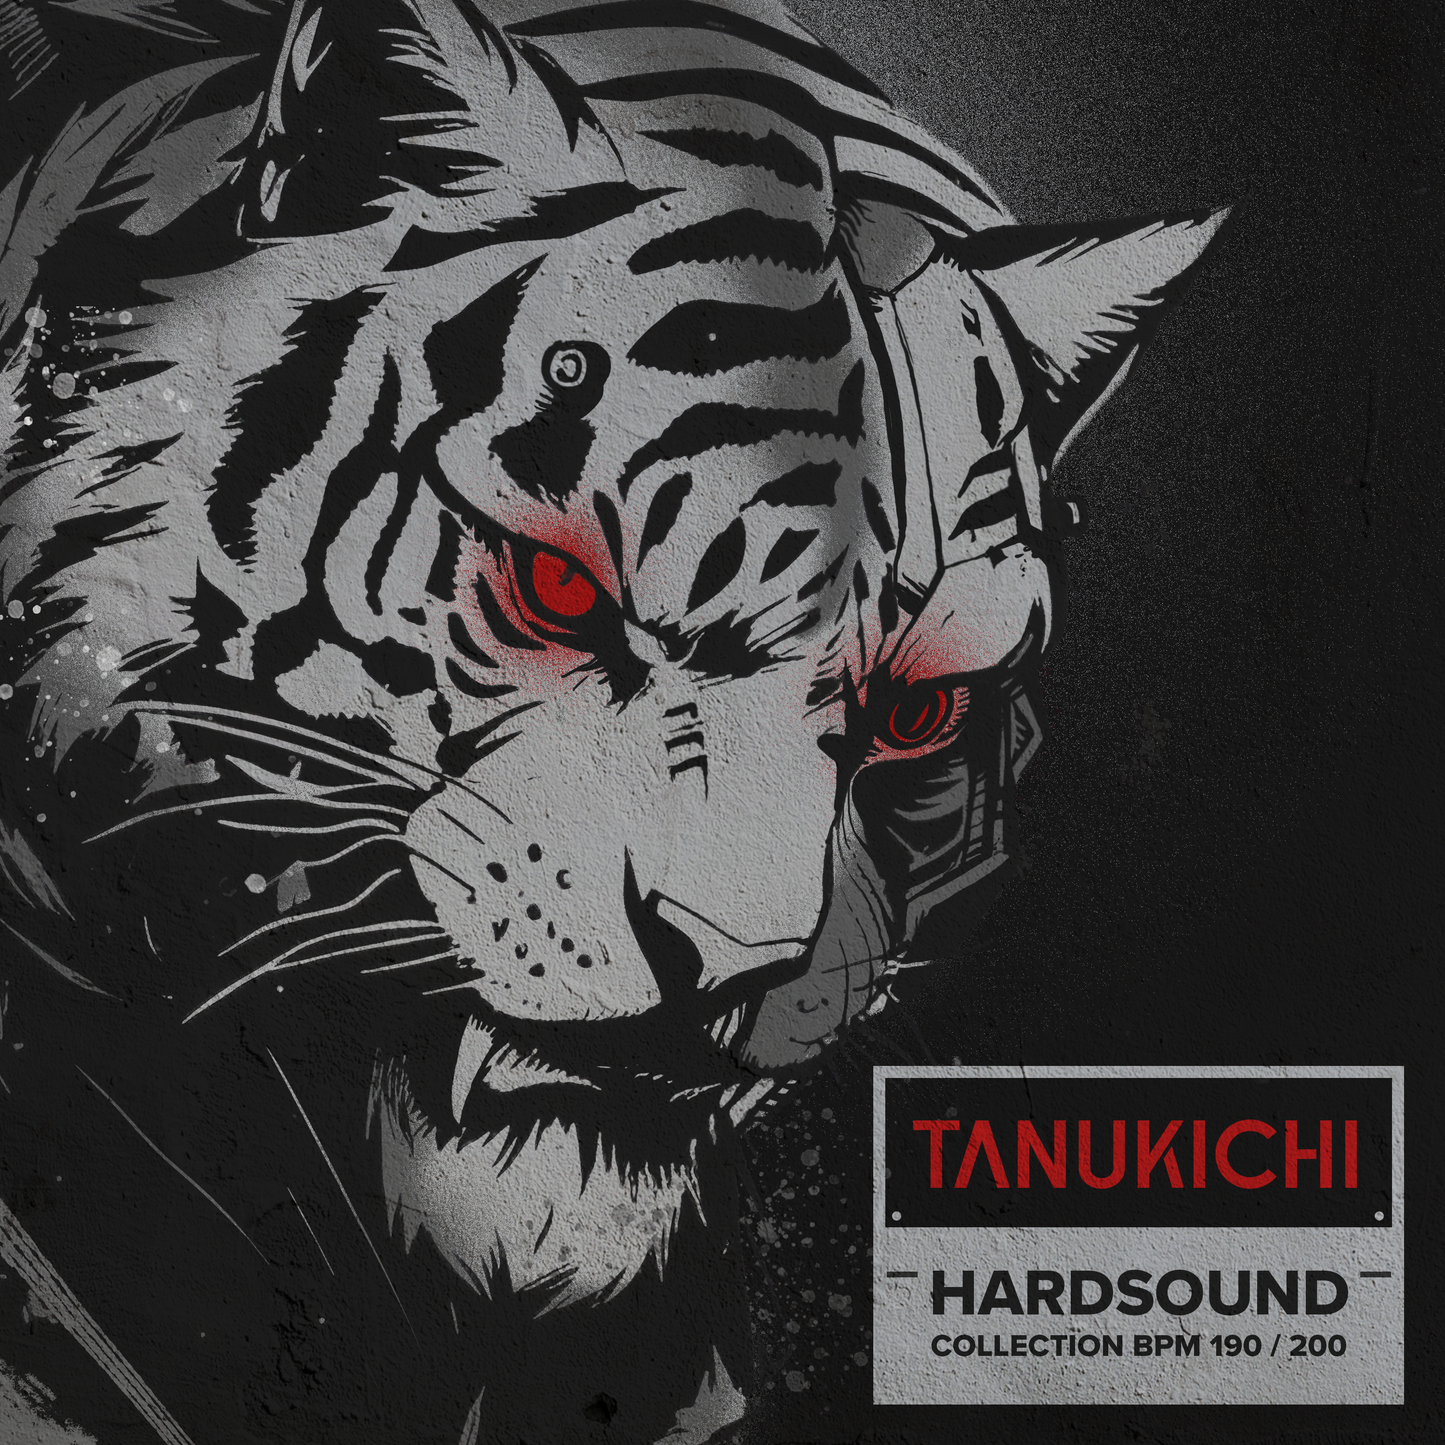 Hardsound Collection (BPM 190, 200) by Tanukichi